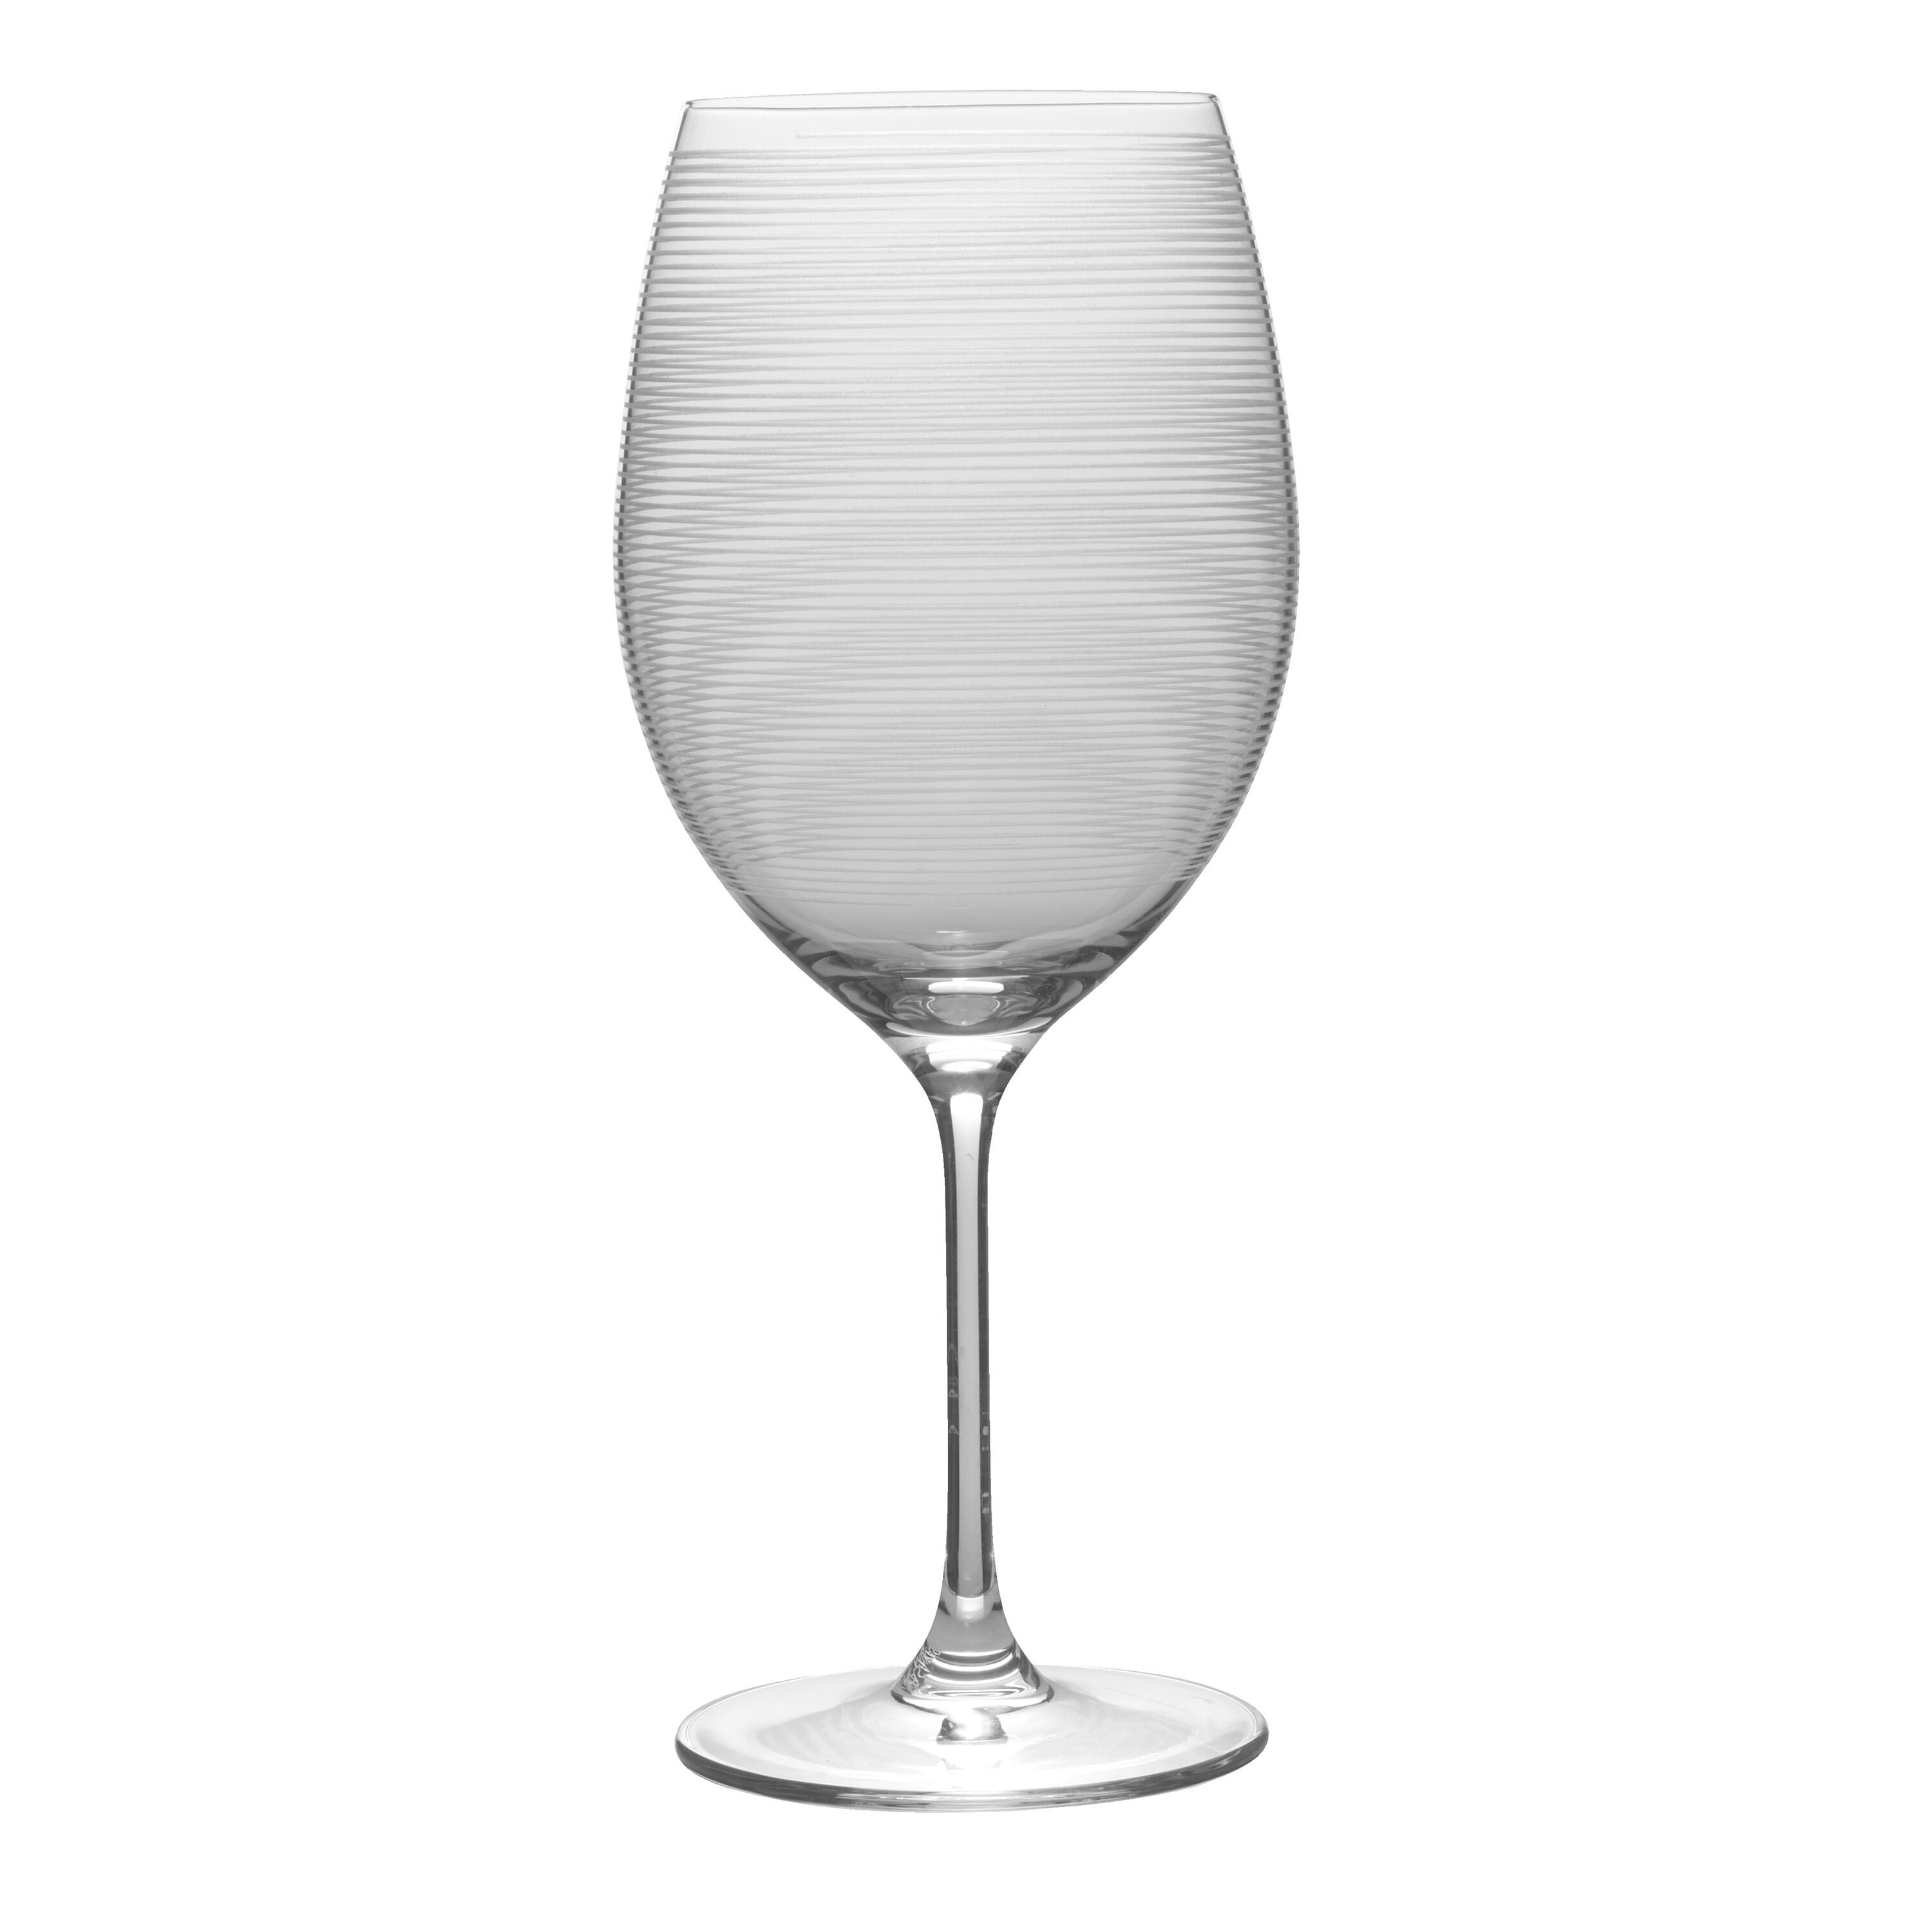 Mikasa Hospitality Martini Glass, Artemis, Clear, 8 oz - Case of 24